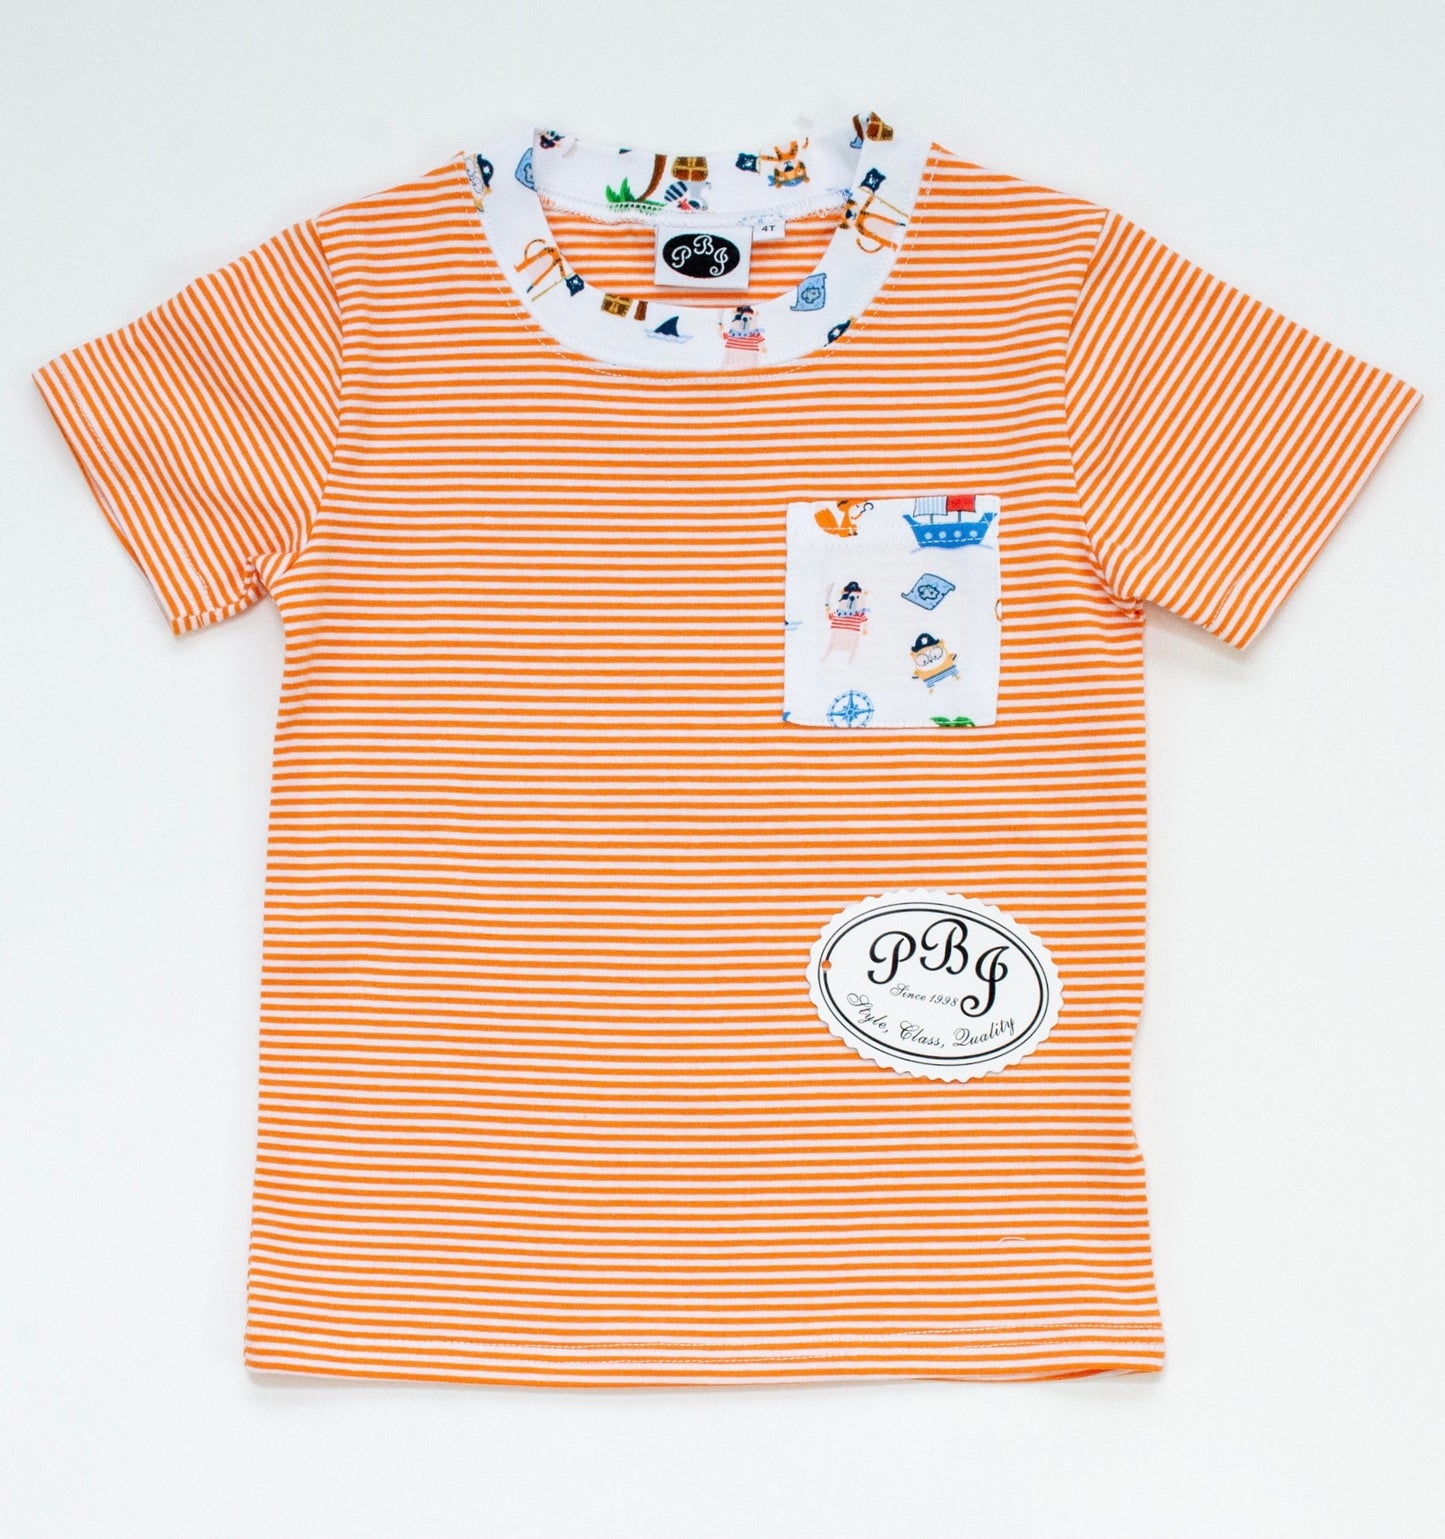 Pocket shirt - Orange stripes/ Pirates